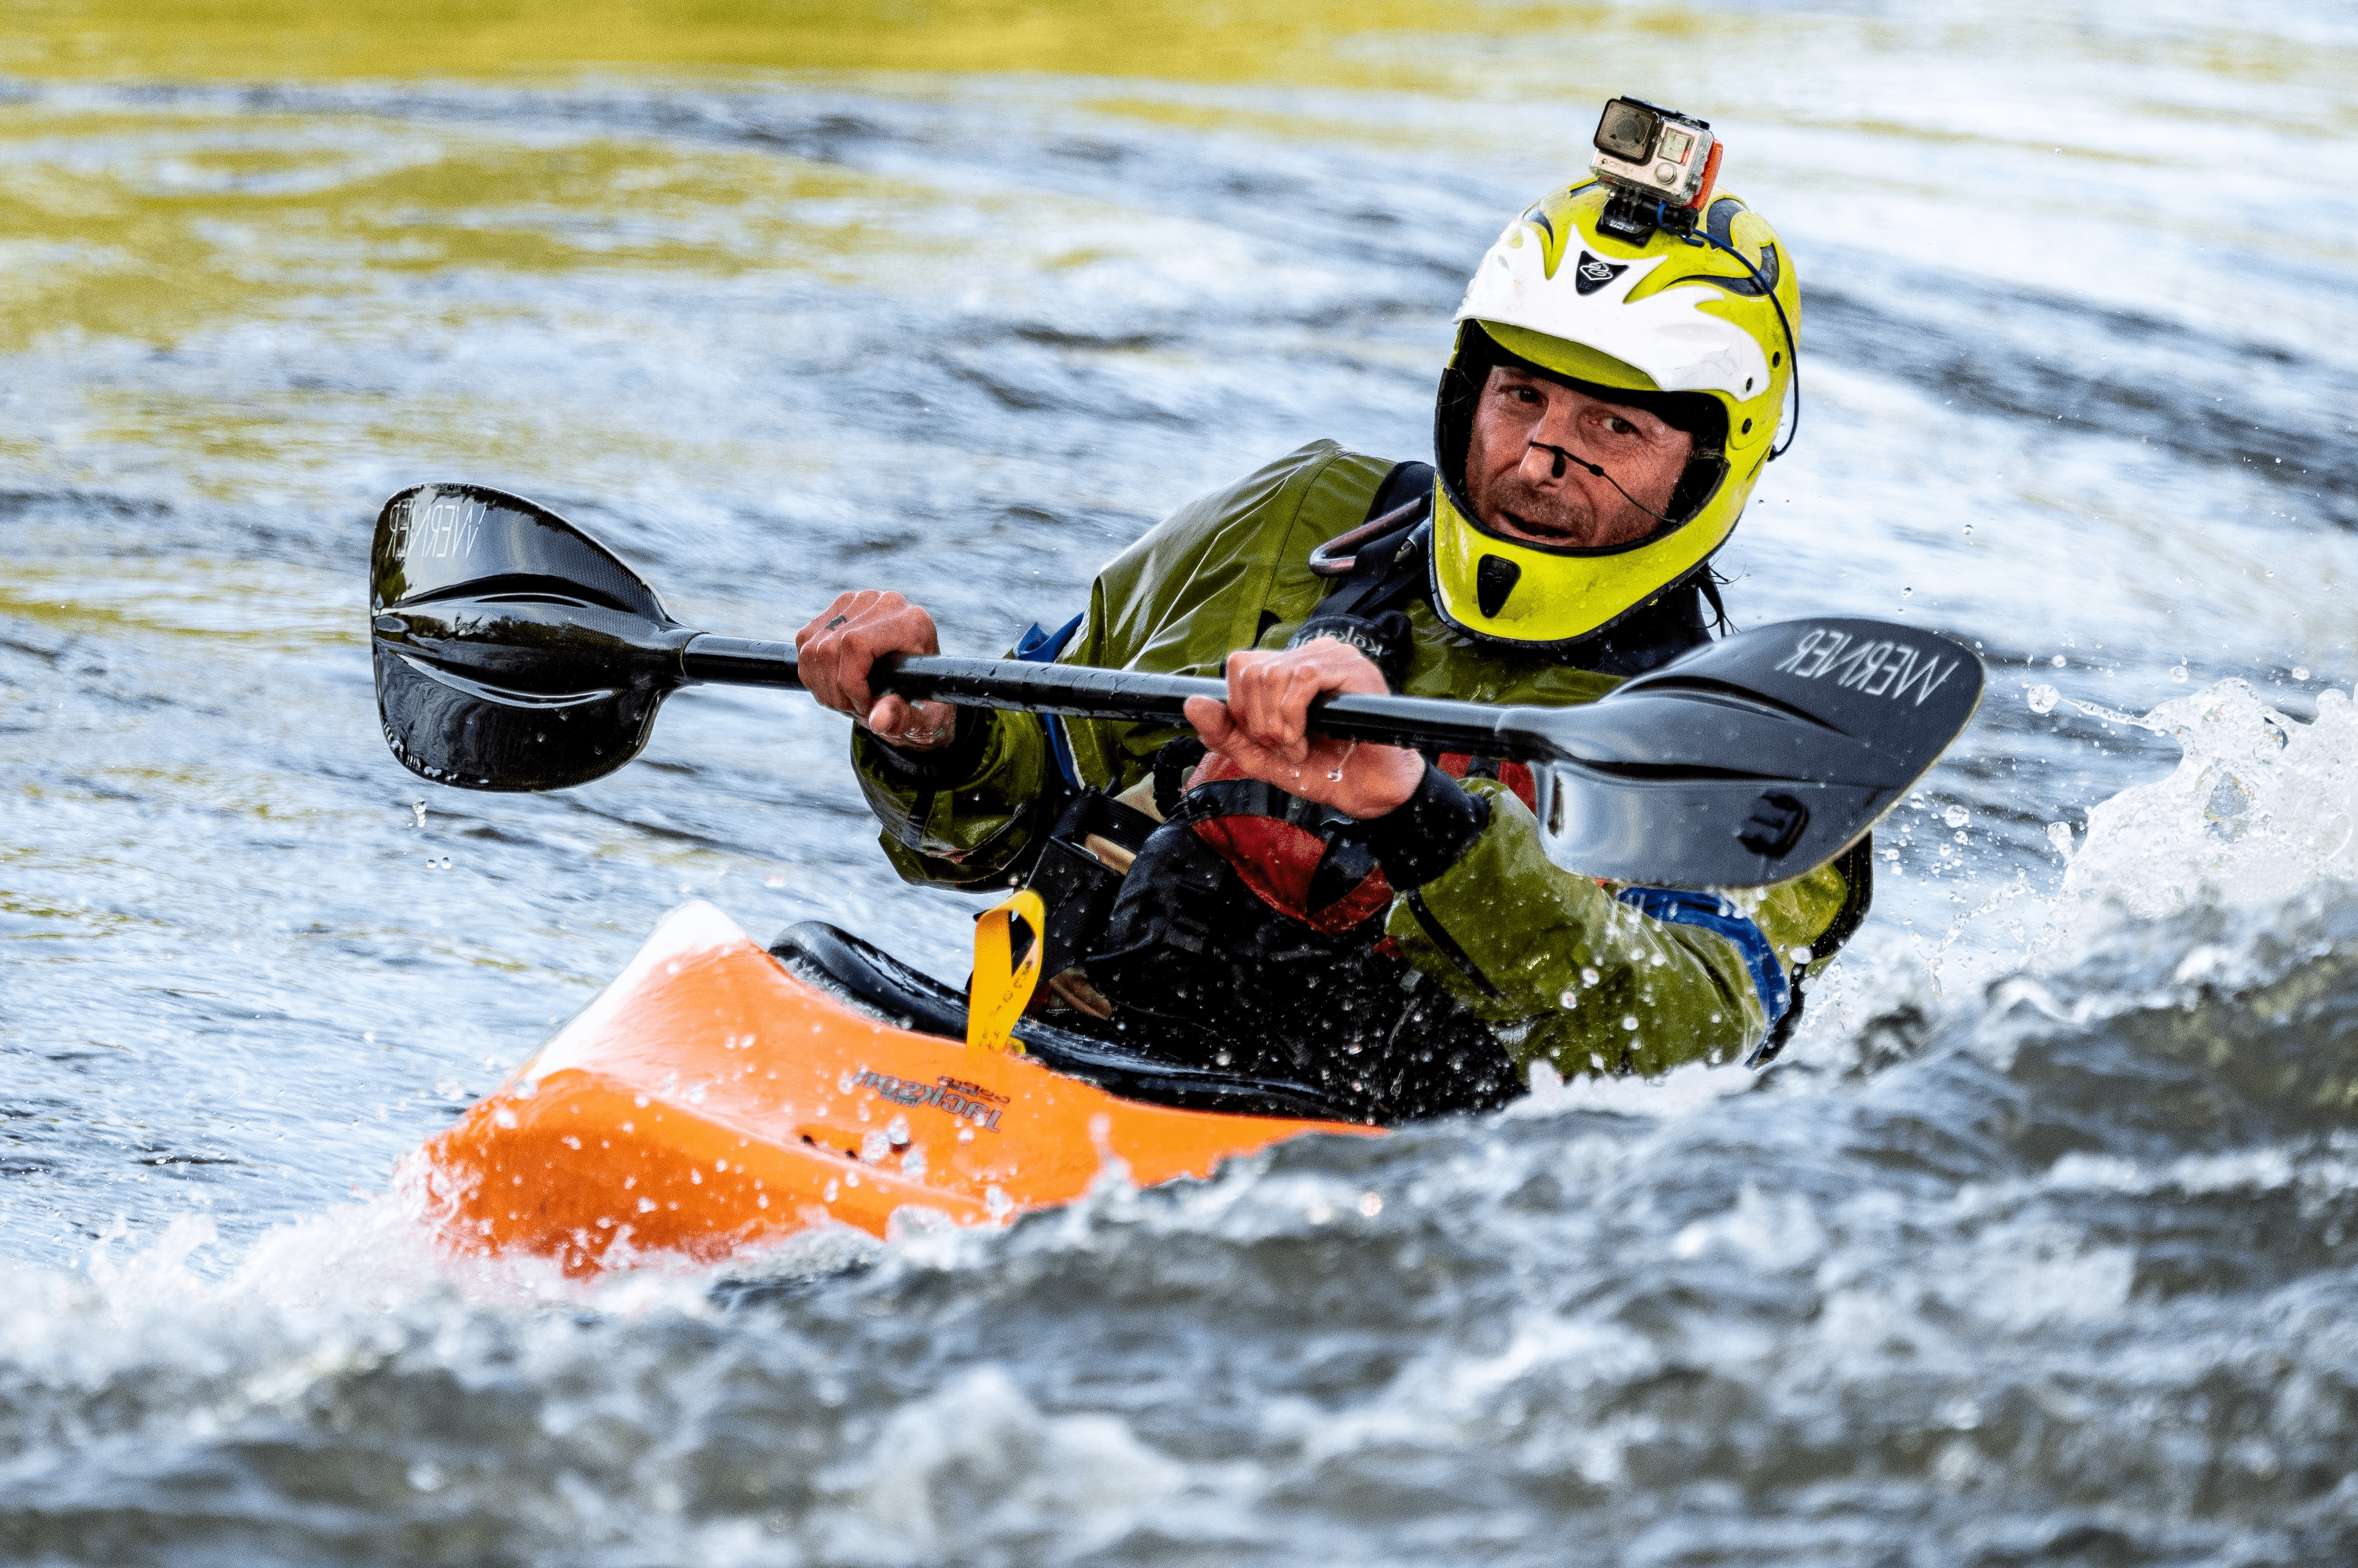 Do you always get wet when kayaking?